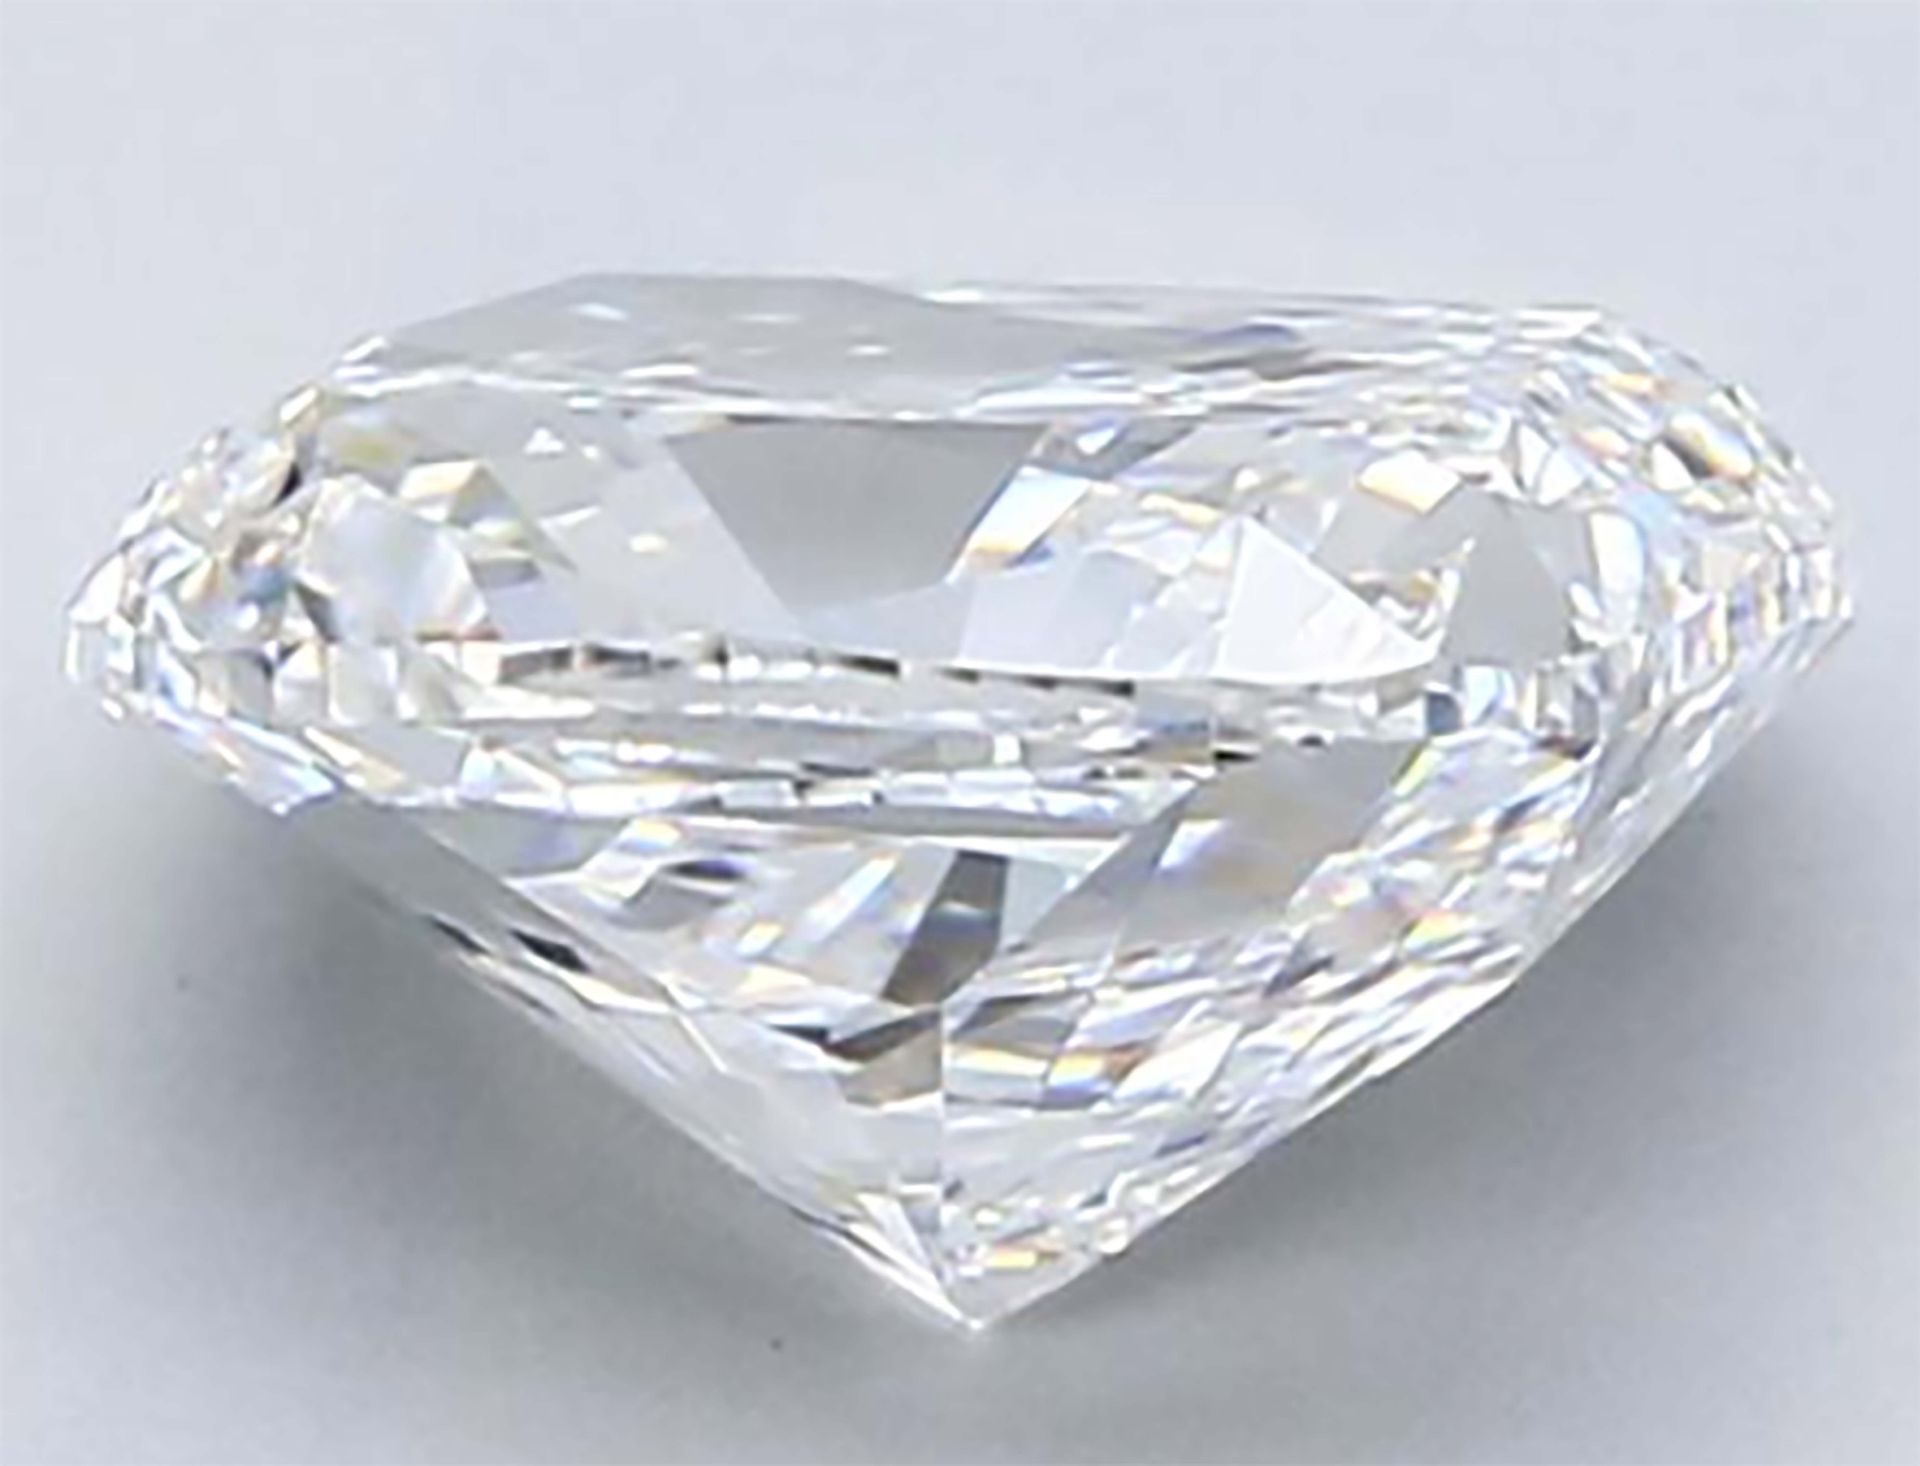 0.60 Carat, GIA Certified, Natural IF Diamond - Image 2 of 5